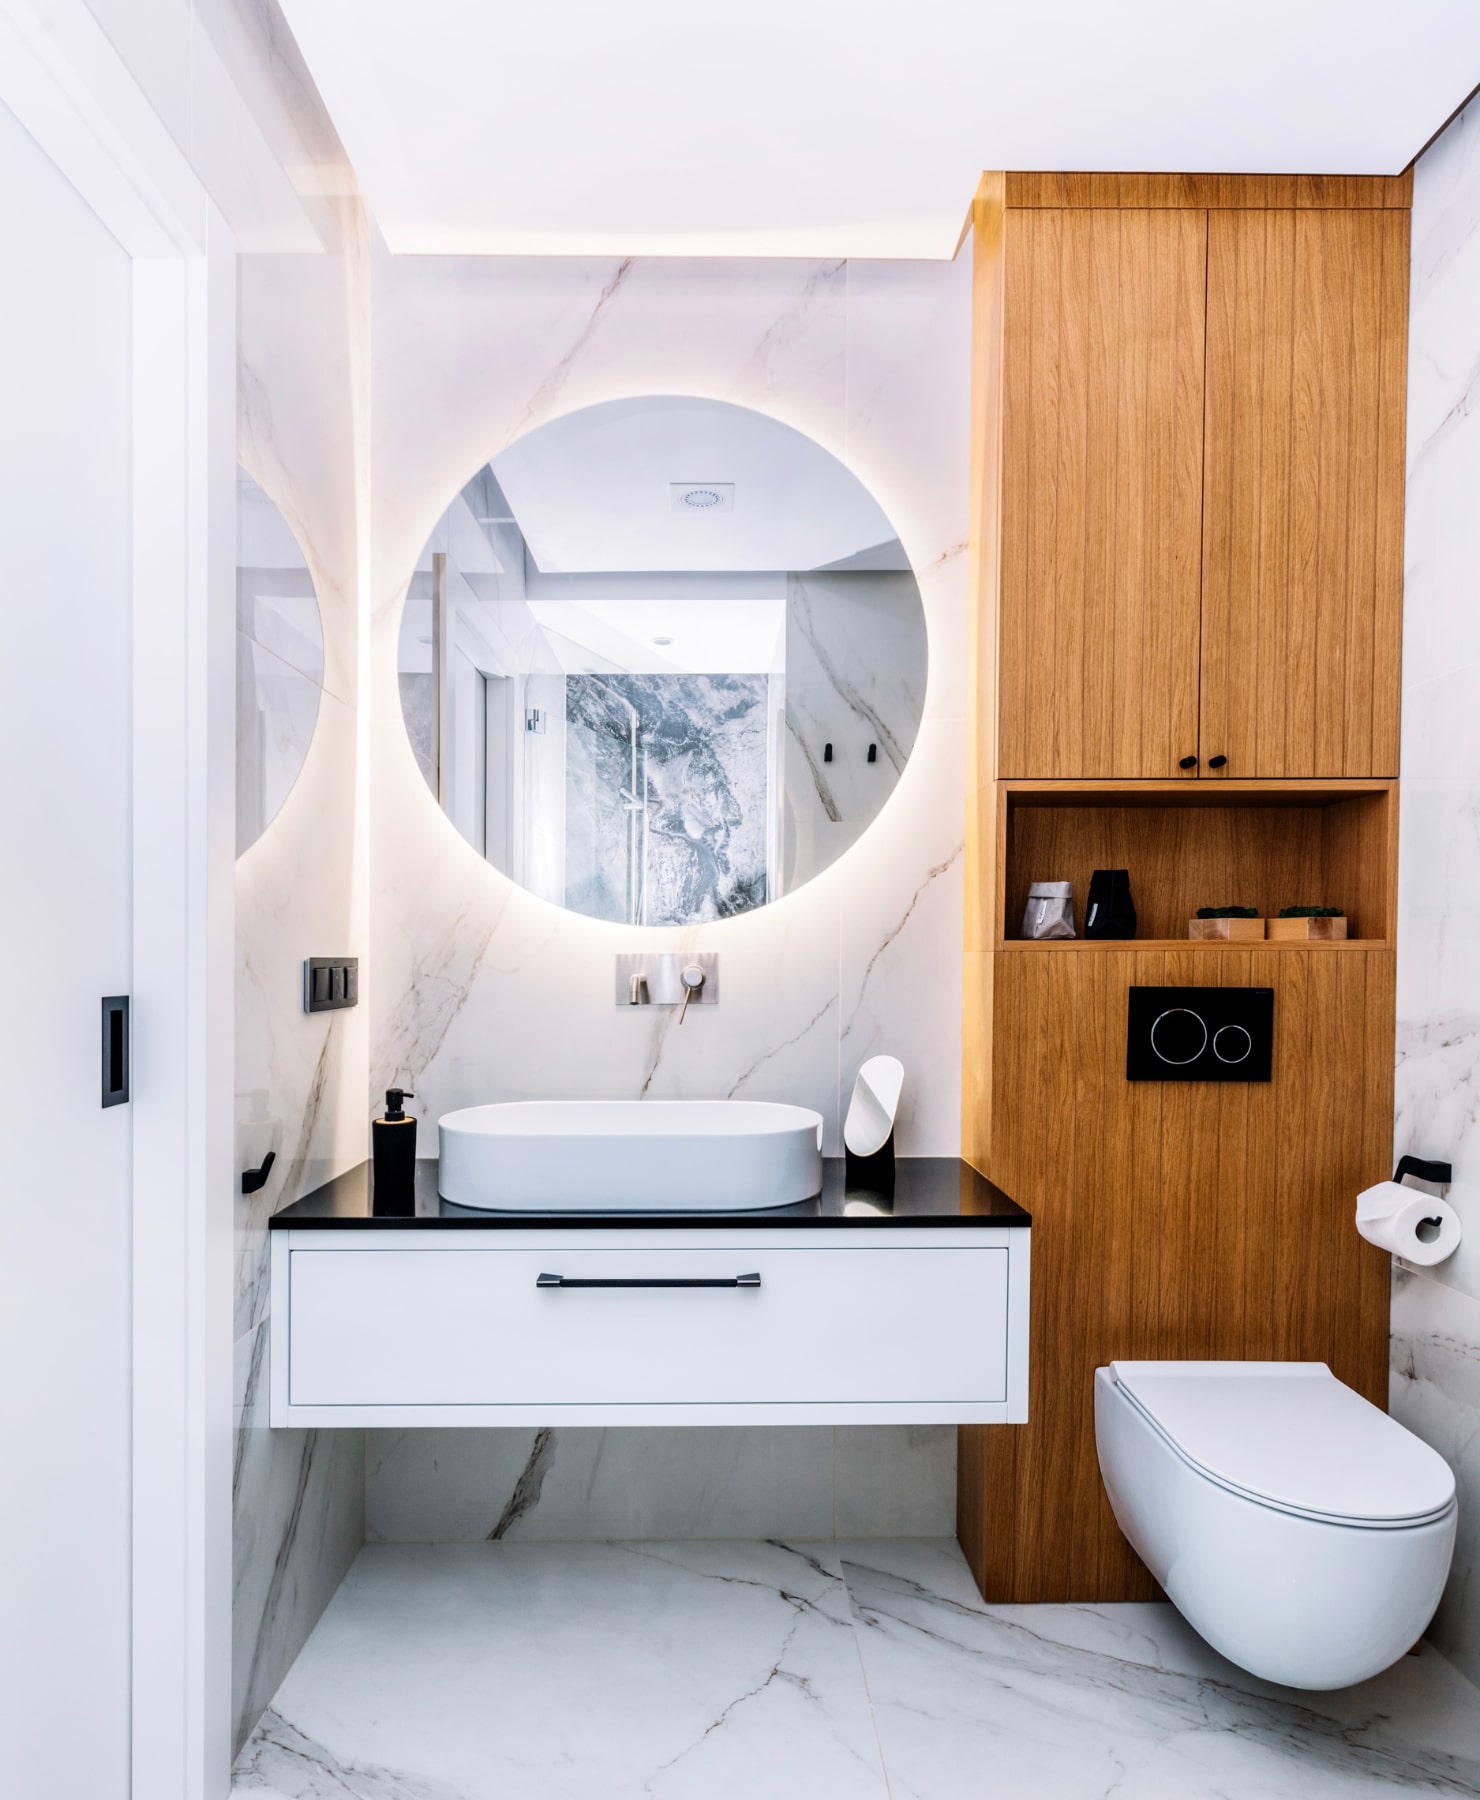 https://www.livehome3d.com/assets/img/articles/small-bathroom-ideas/white-marble-bathroom@2x.jpg